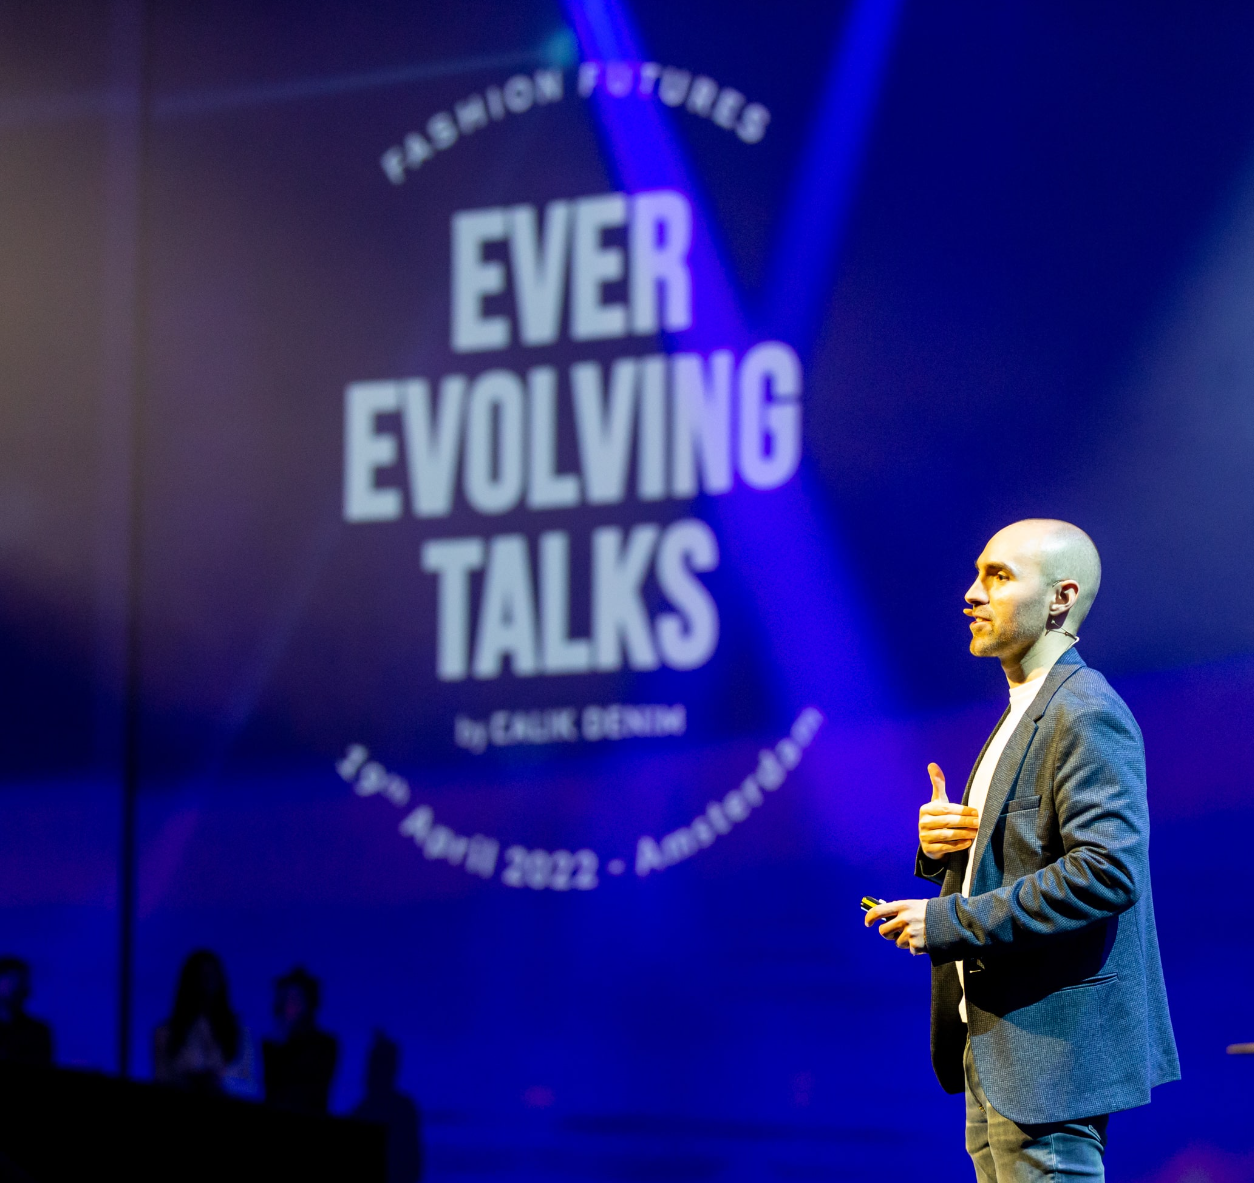 Ever Evolving Talks by Calik Denim